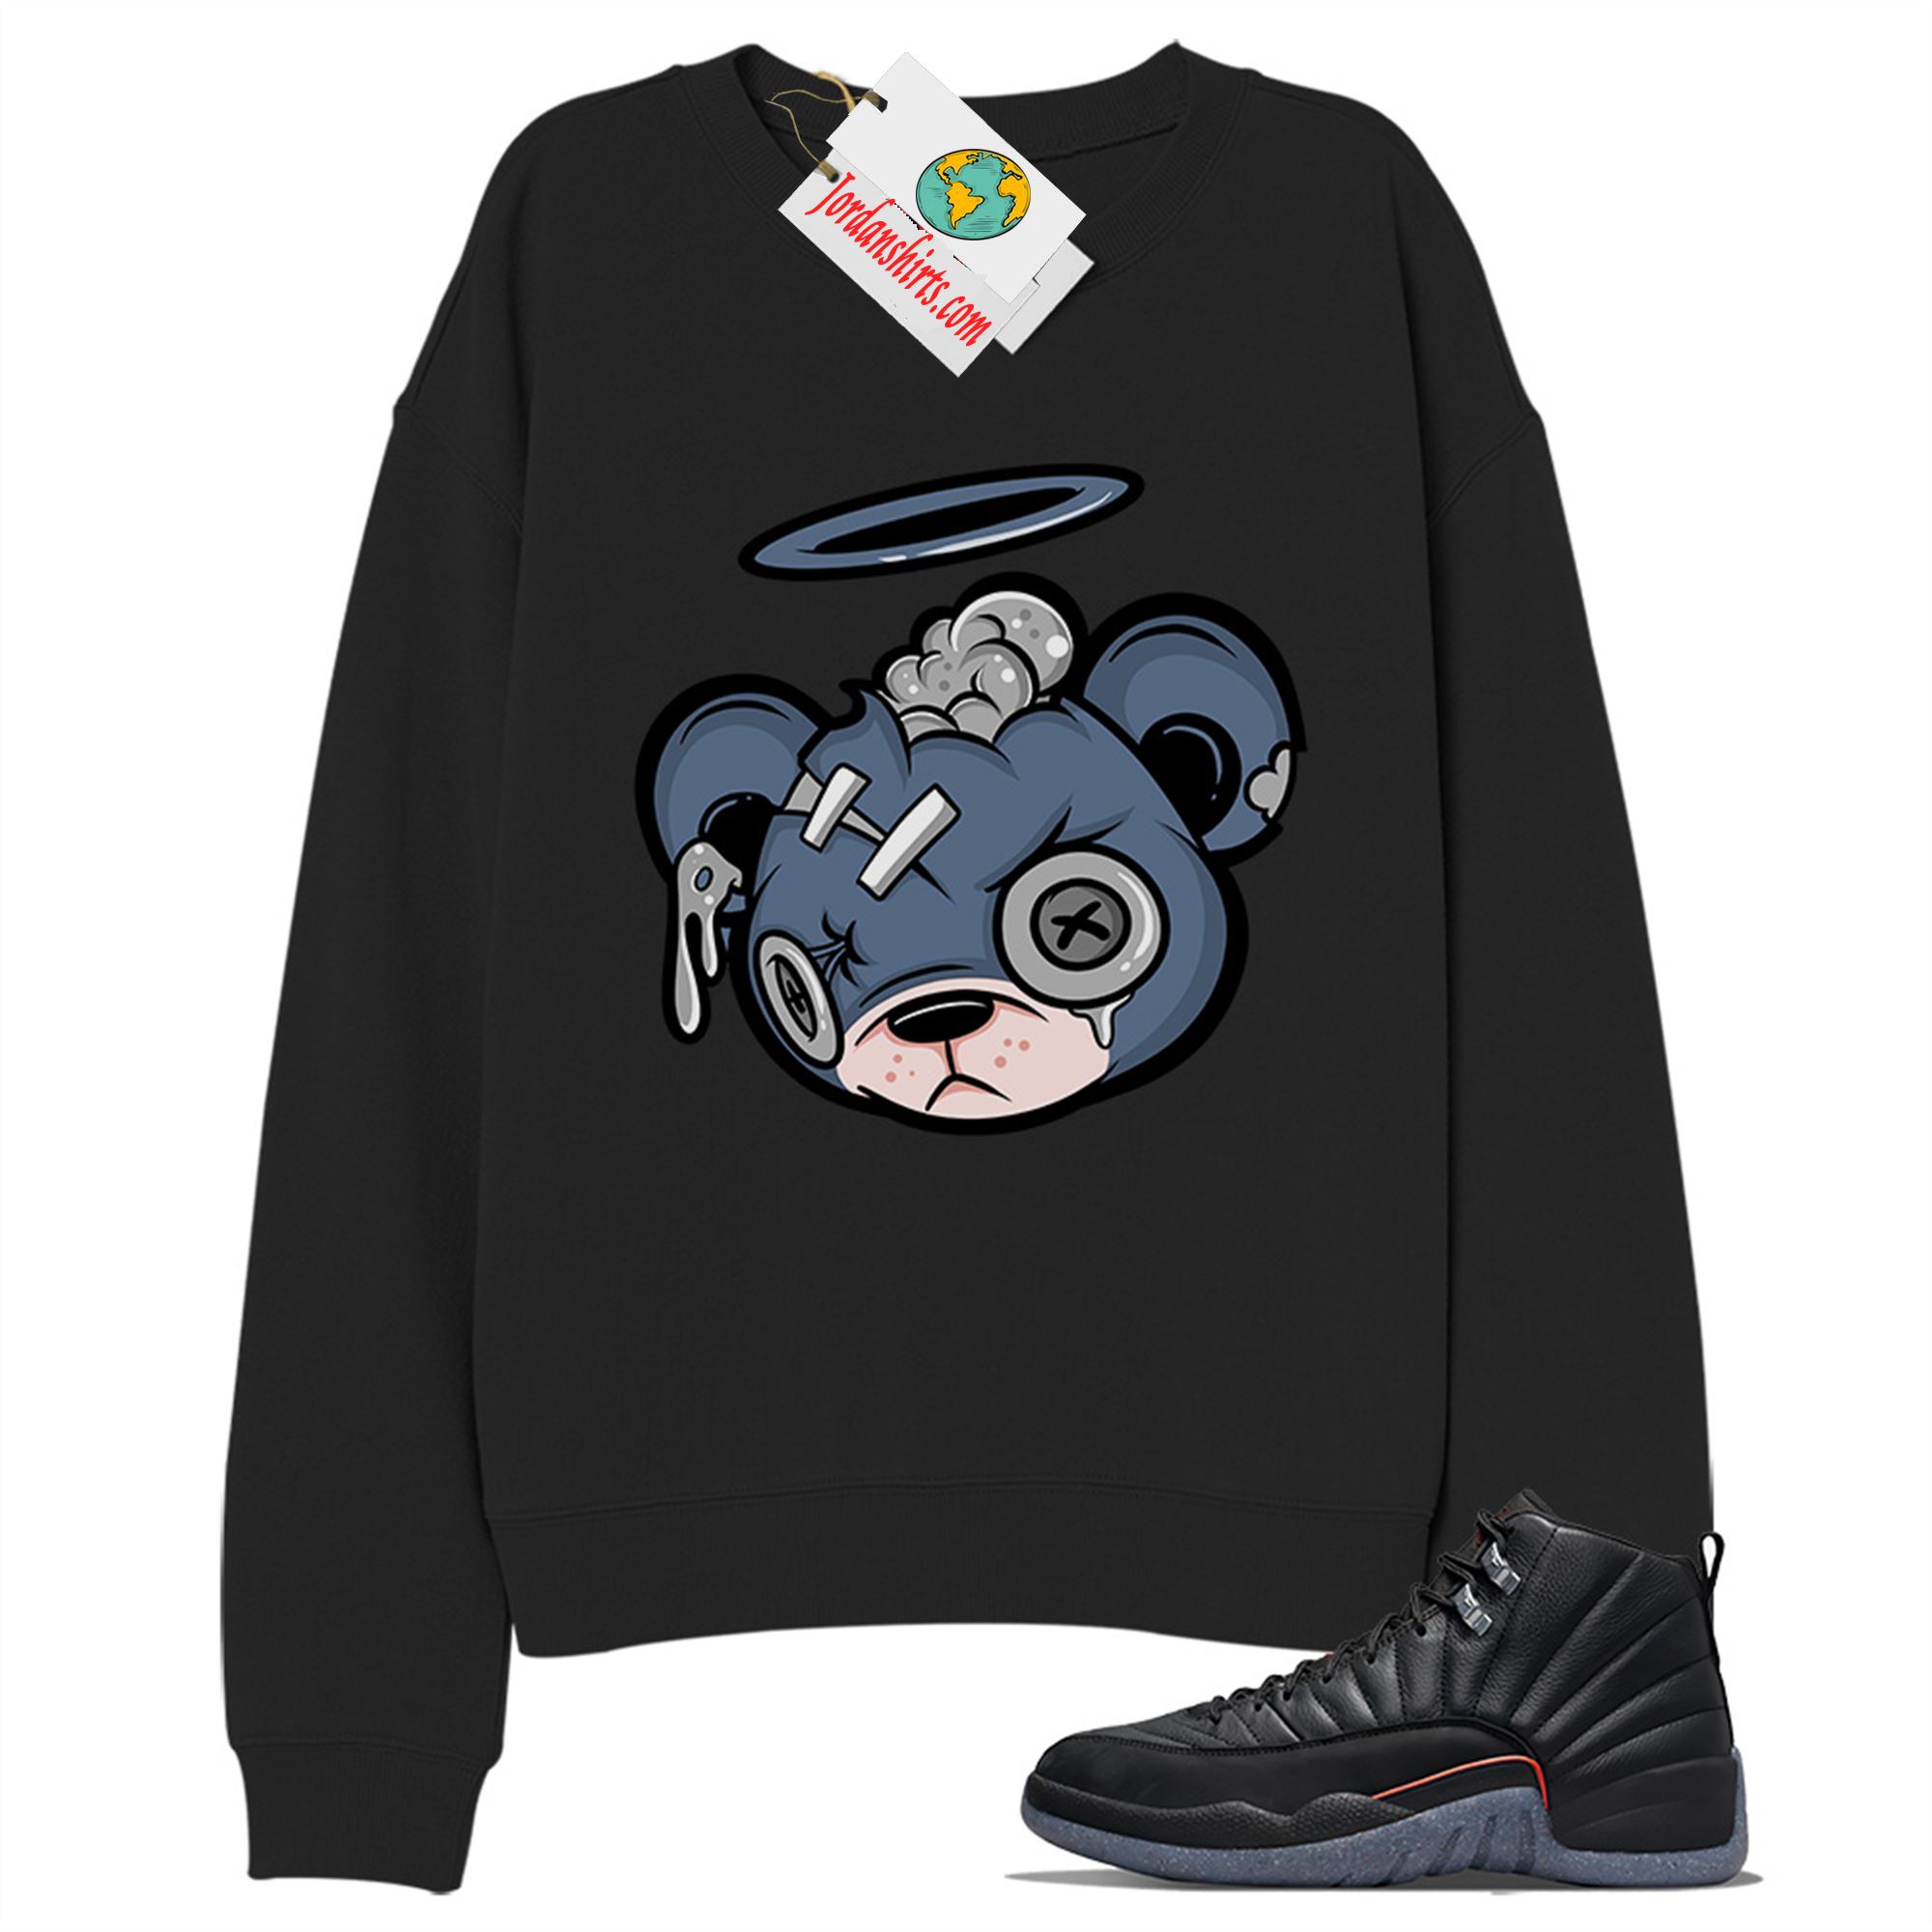 Jordan 12 Sweatshirt, Teddy Bear With Angel Ring Black Sweatshirt Air Jordan 12 Utility Grind 12s Size Up To 5xl